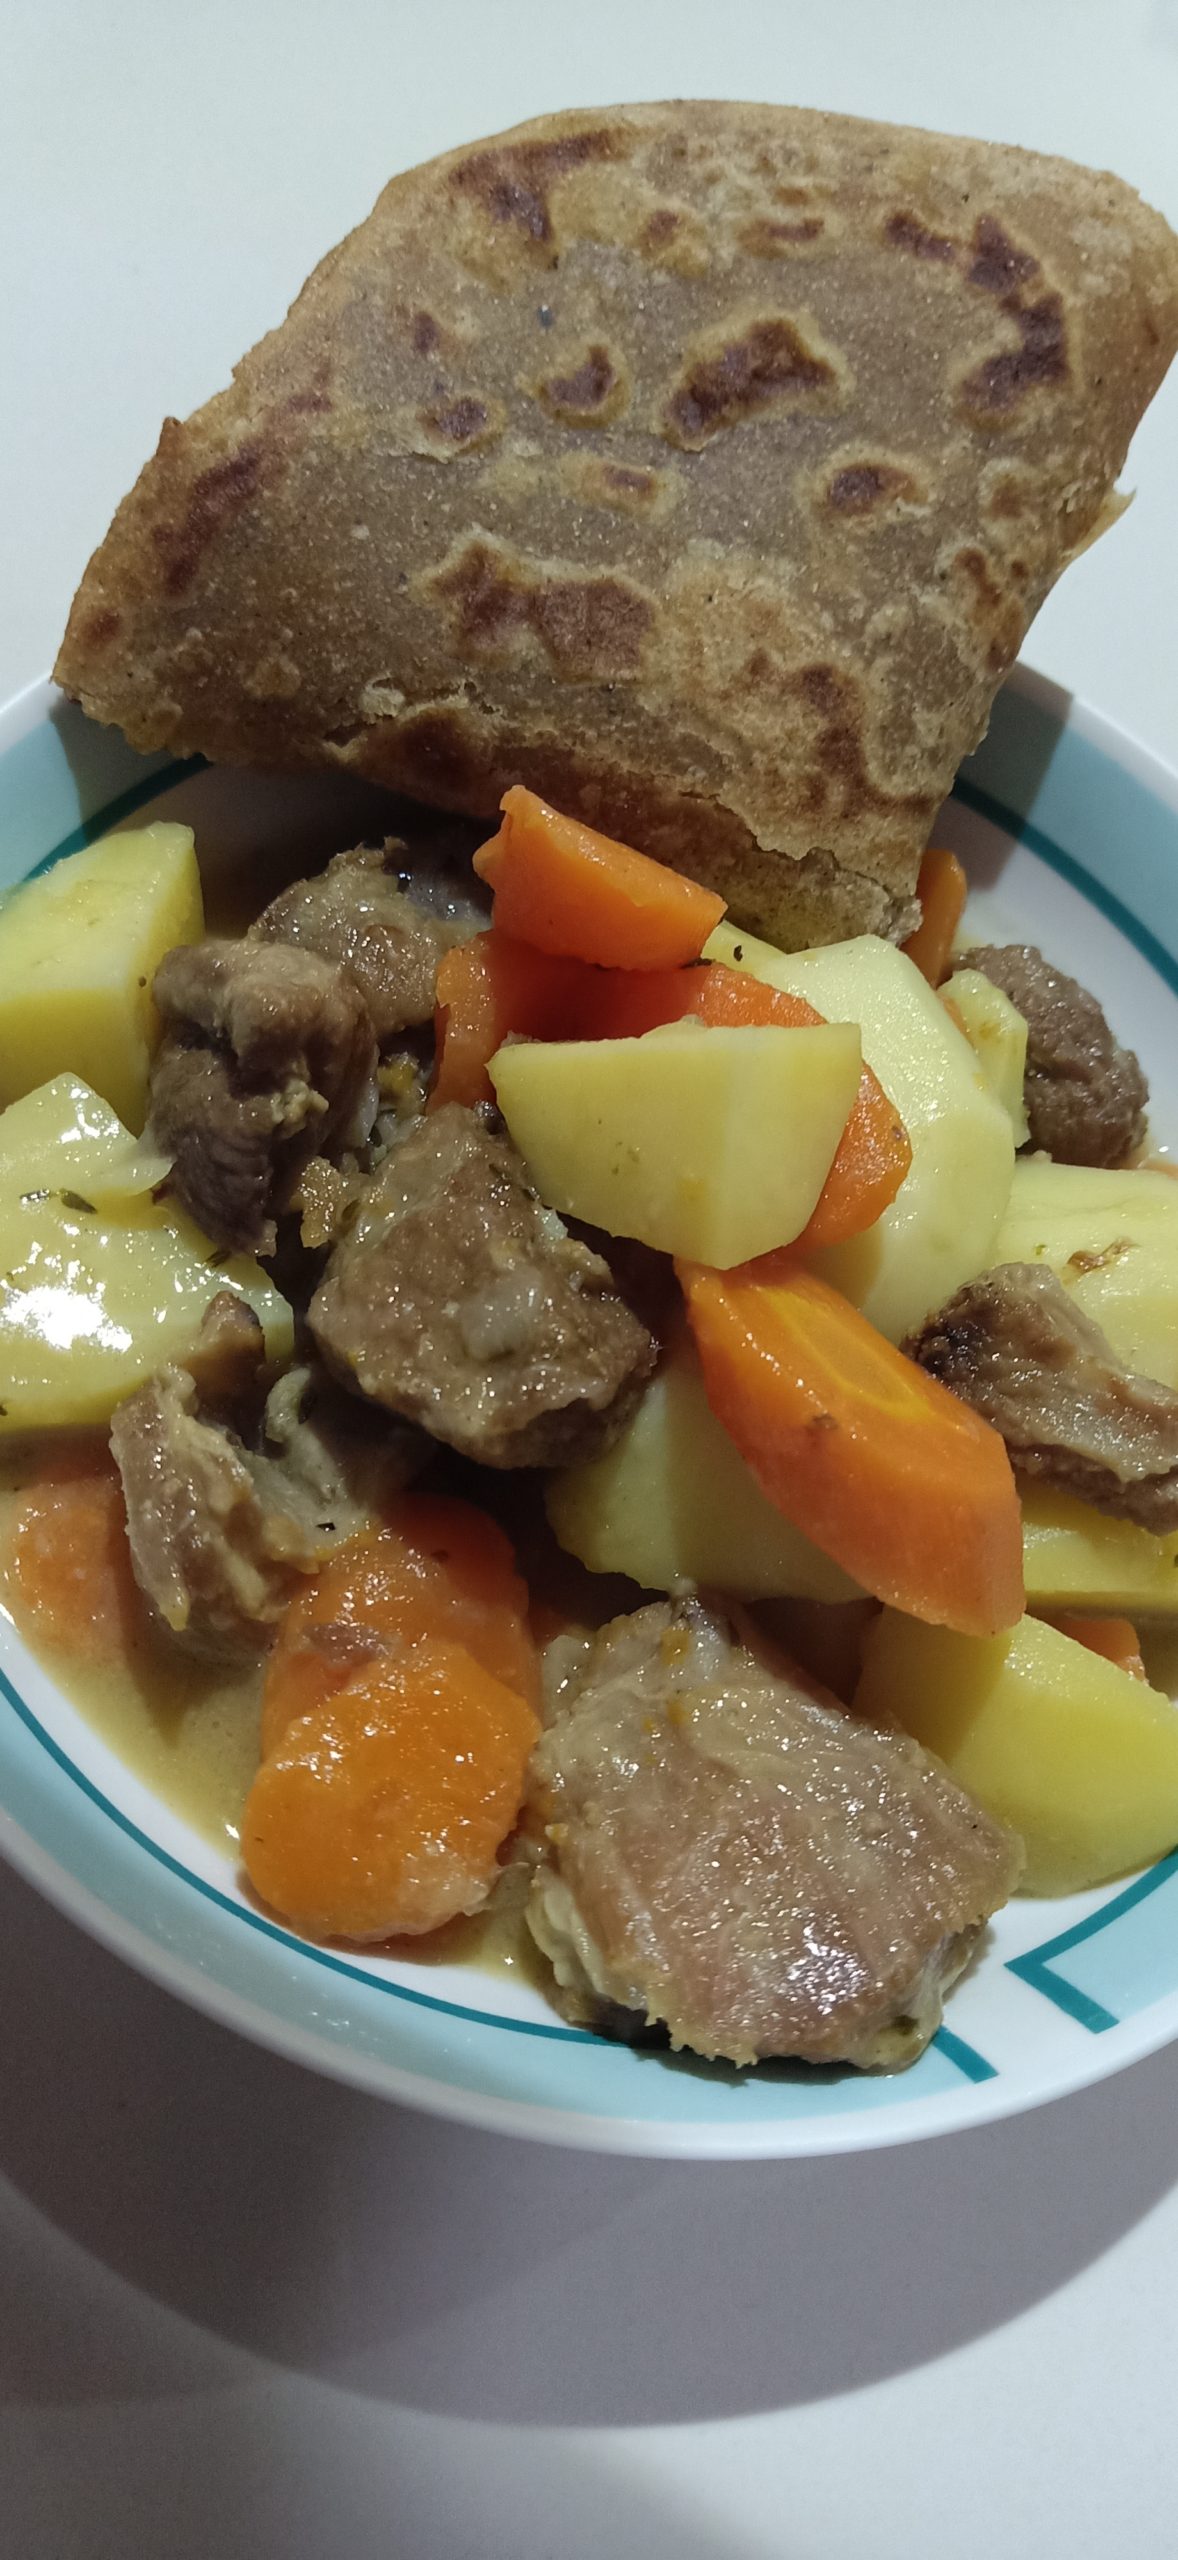 Lamb & Potatoes Stew (One pot meal)